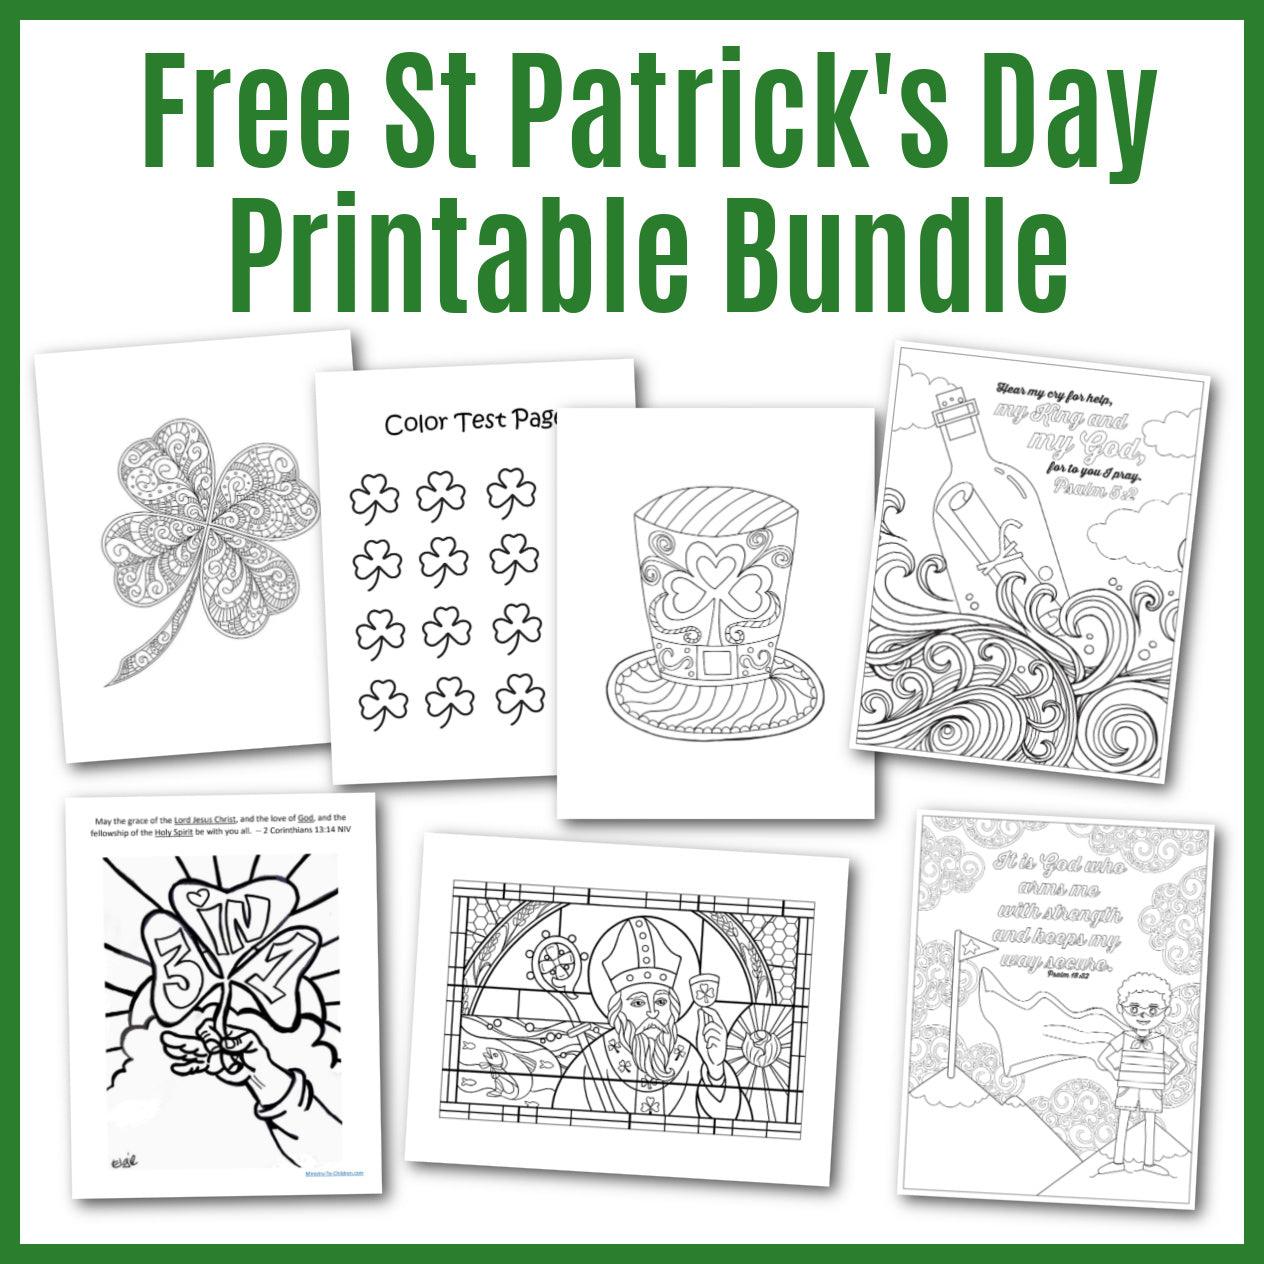 St patricks day printable bundle free download